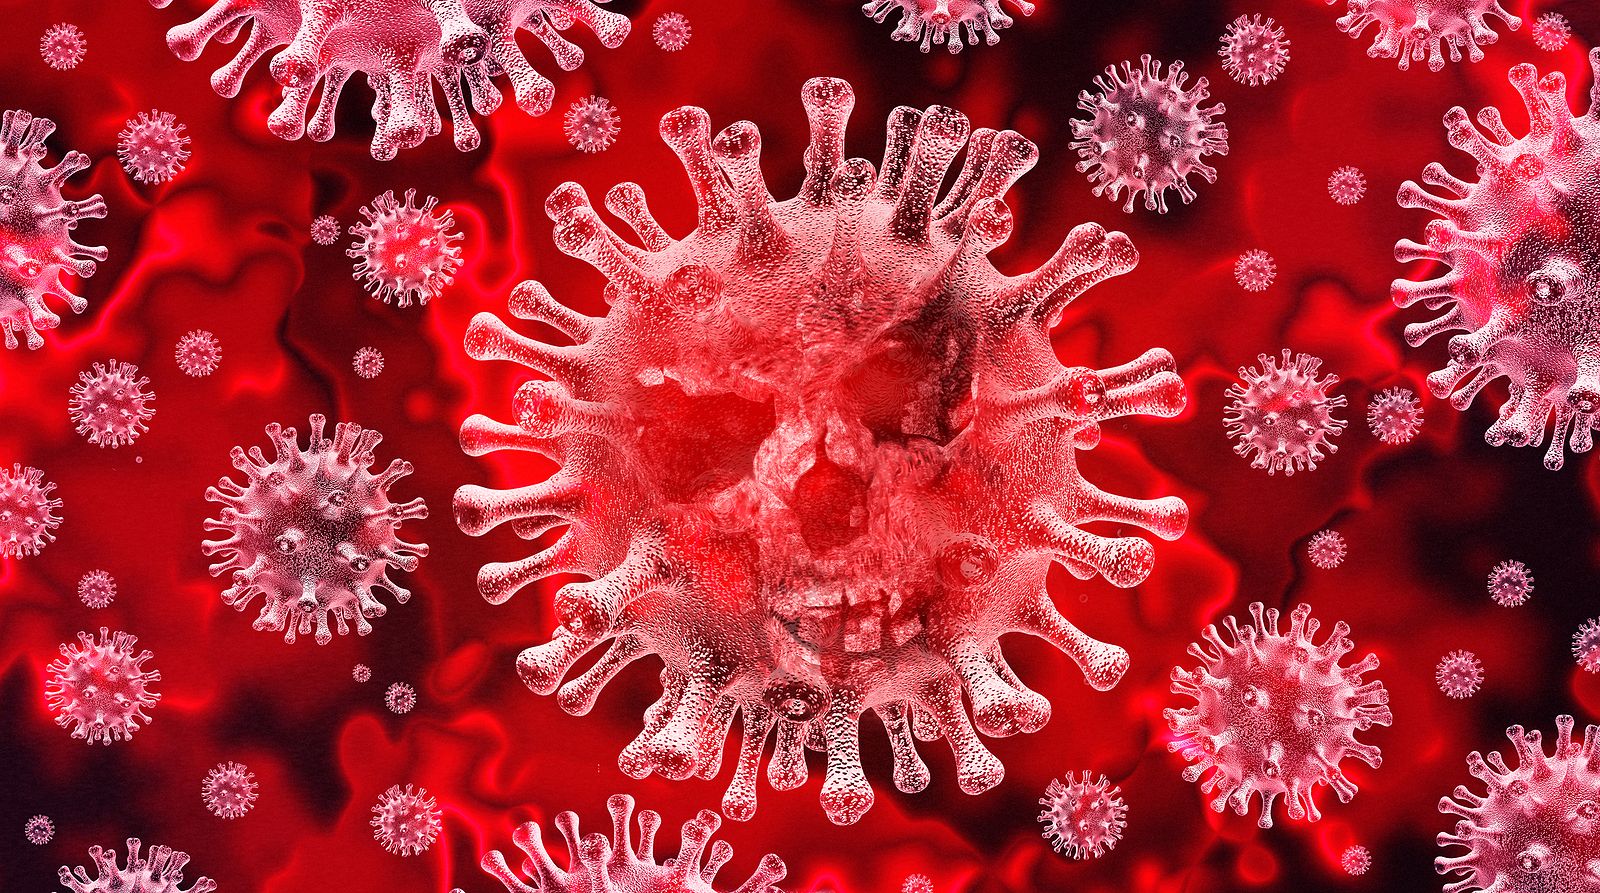 'Khosta-2': descubren un nuevo coronavirus parecido a la Covid que infecta humanos